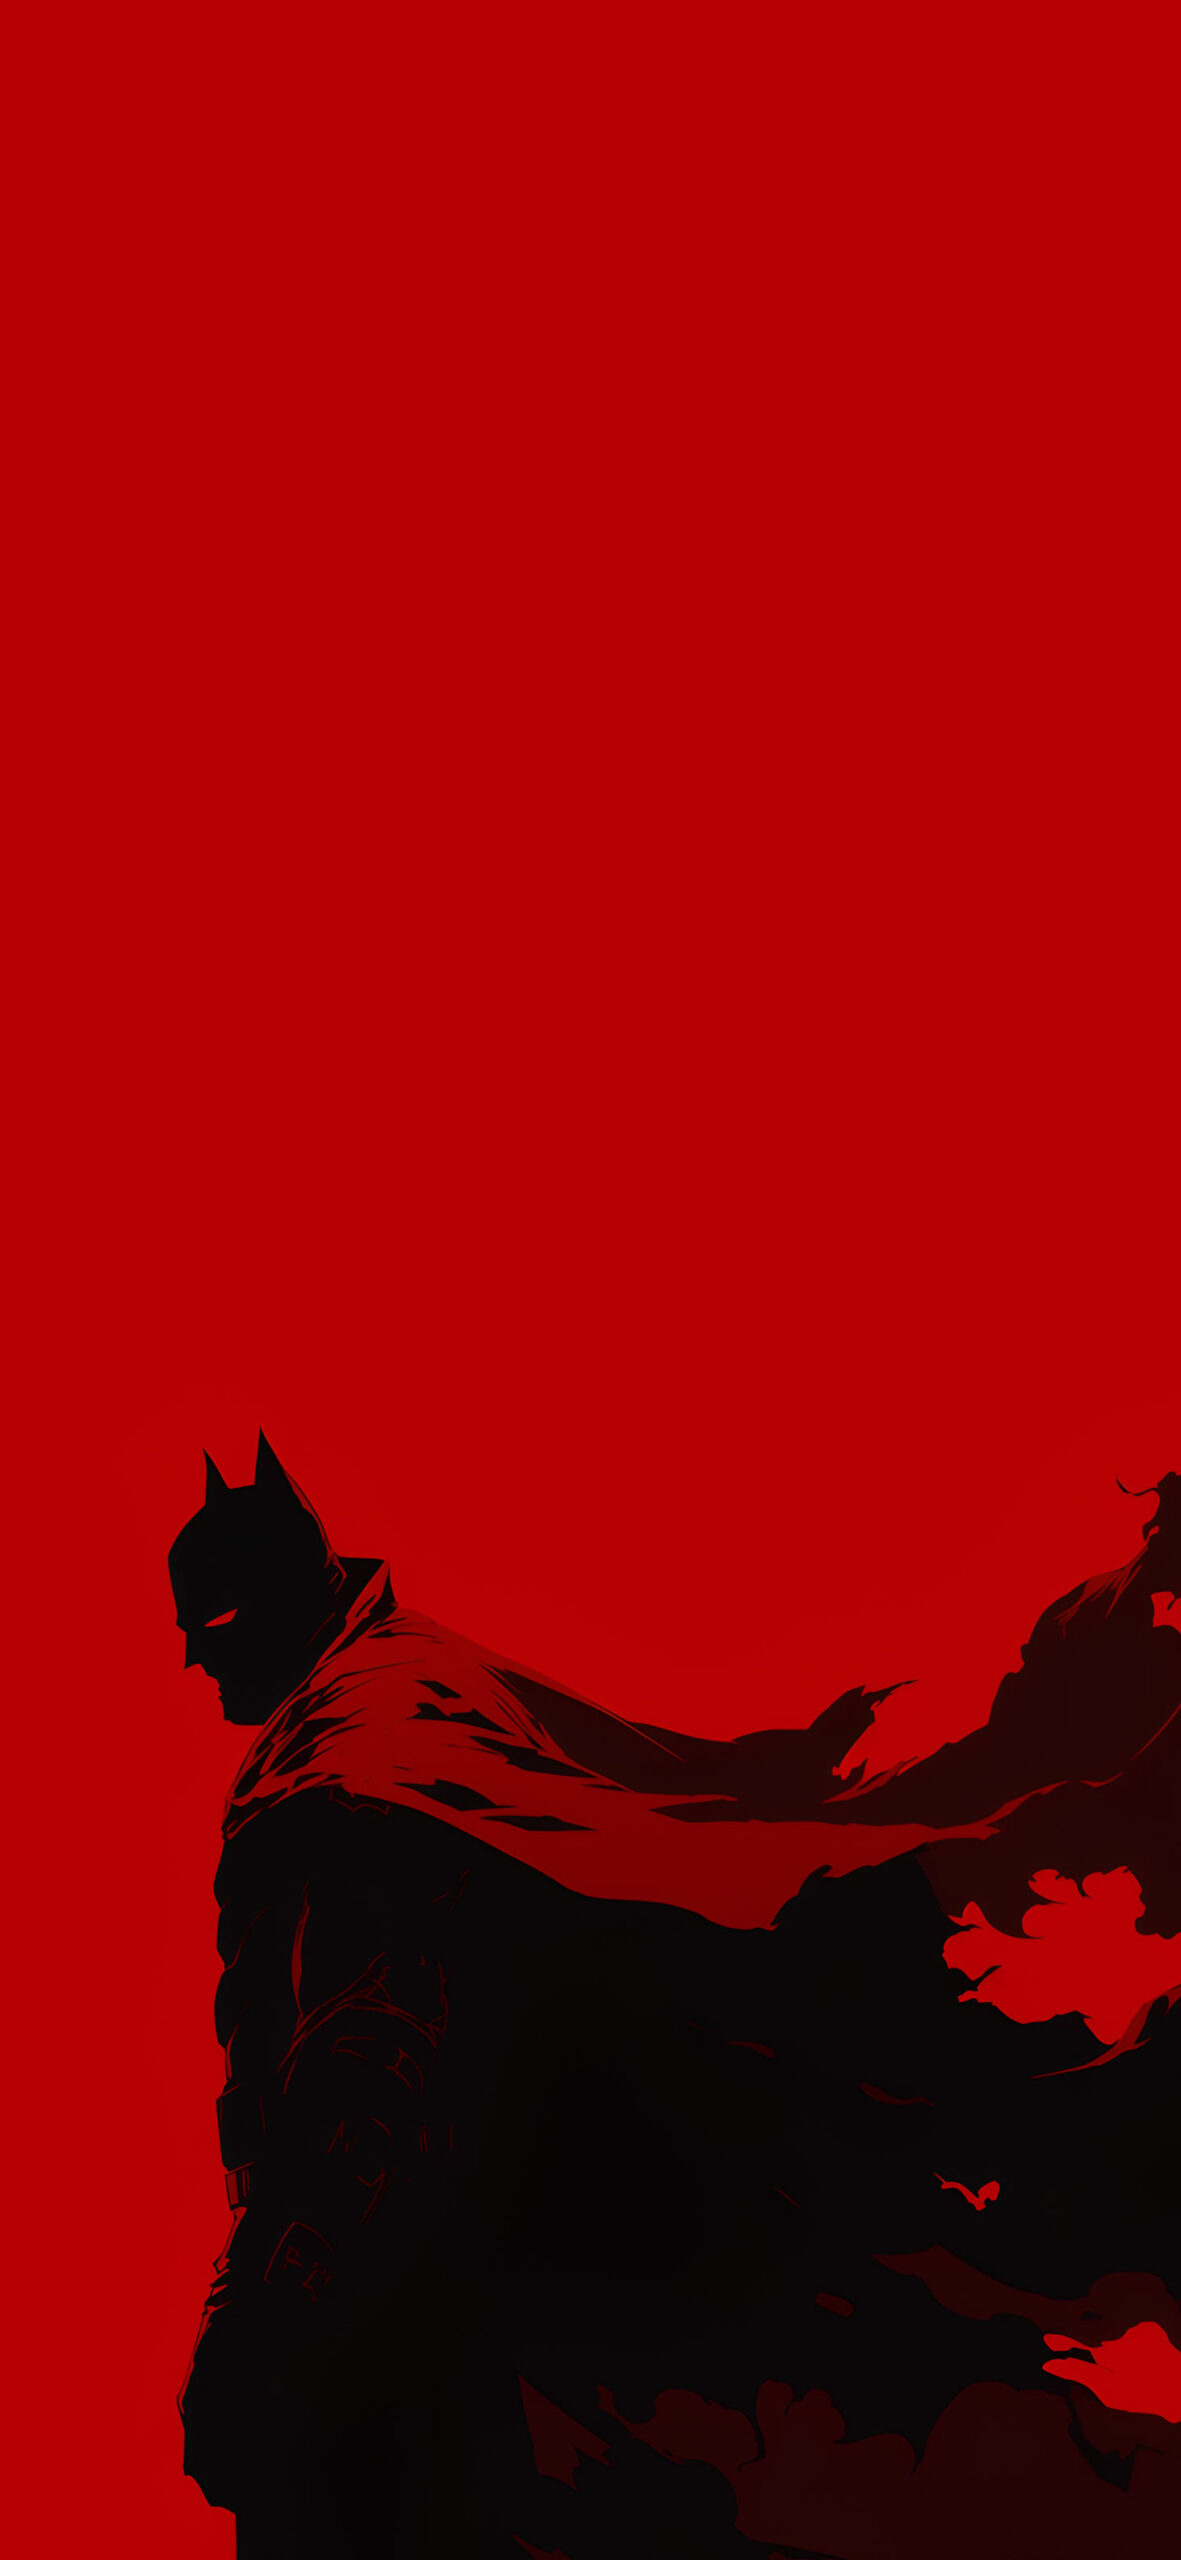 Dark silhouette of batman on red background wallpaper DC aesth